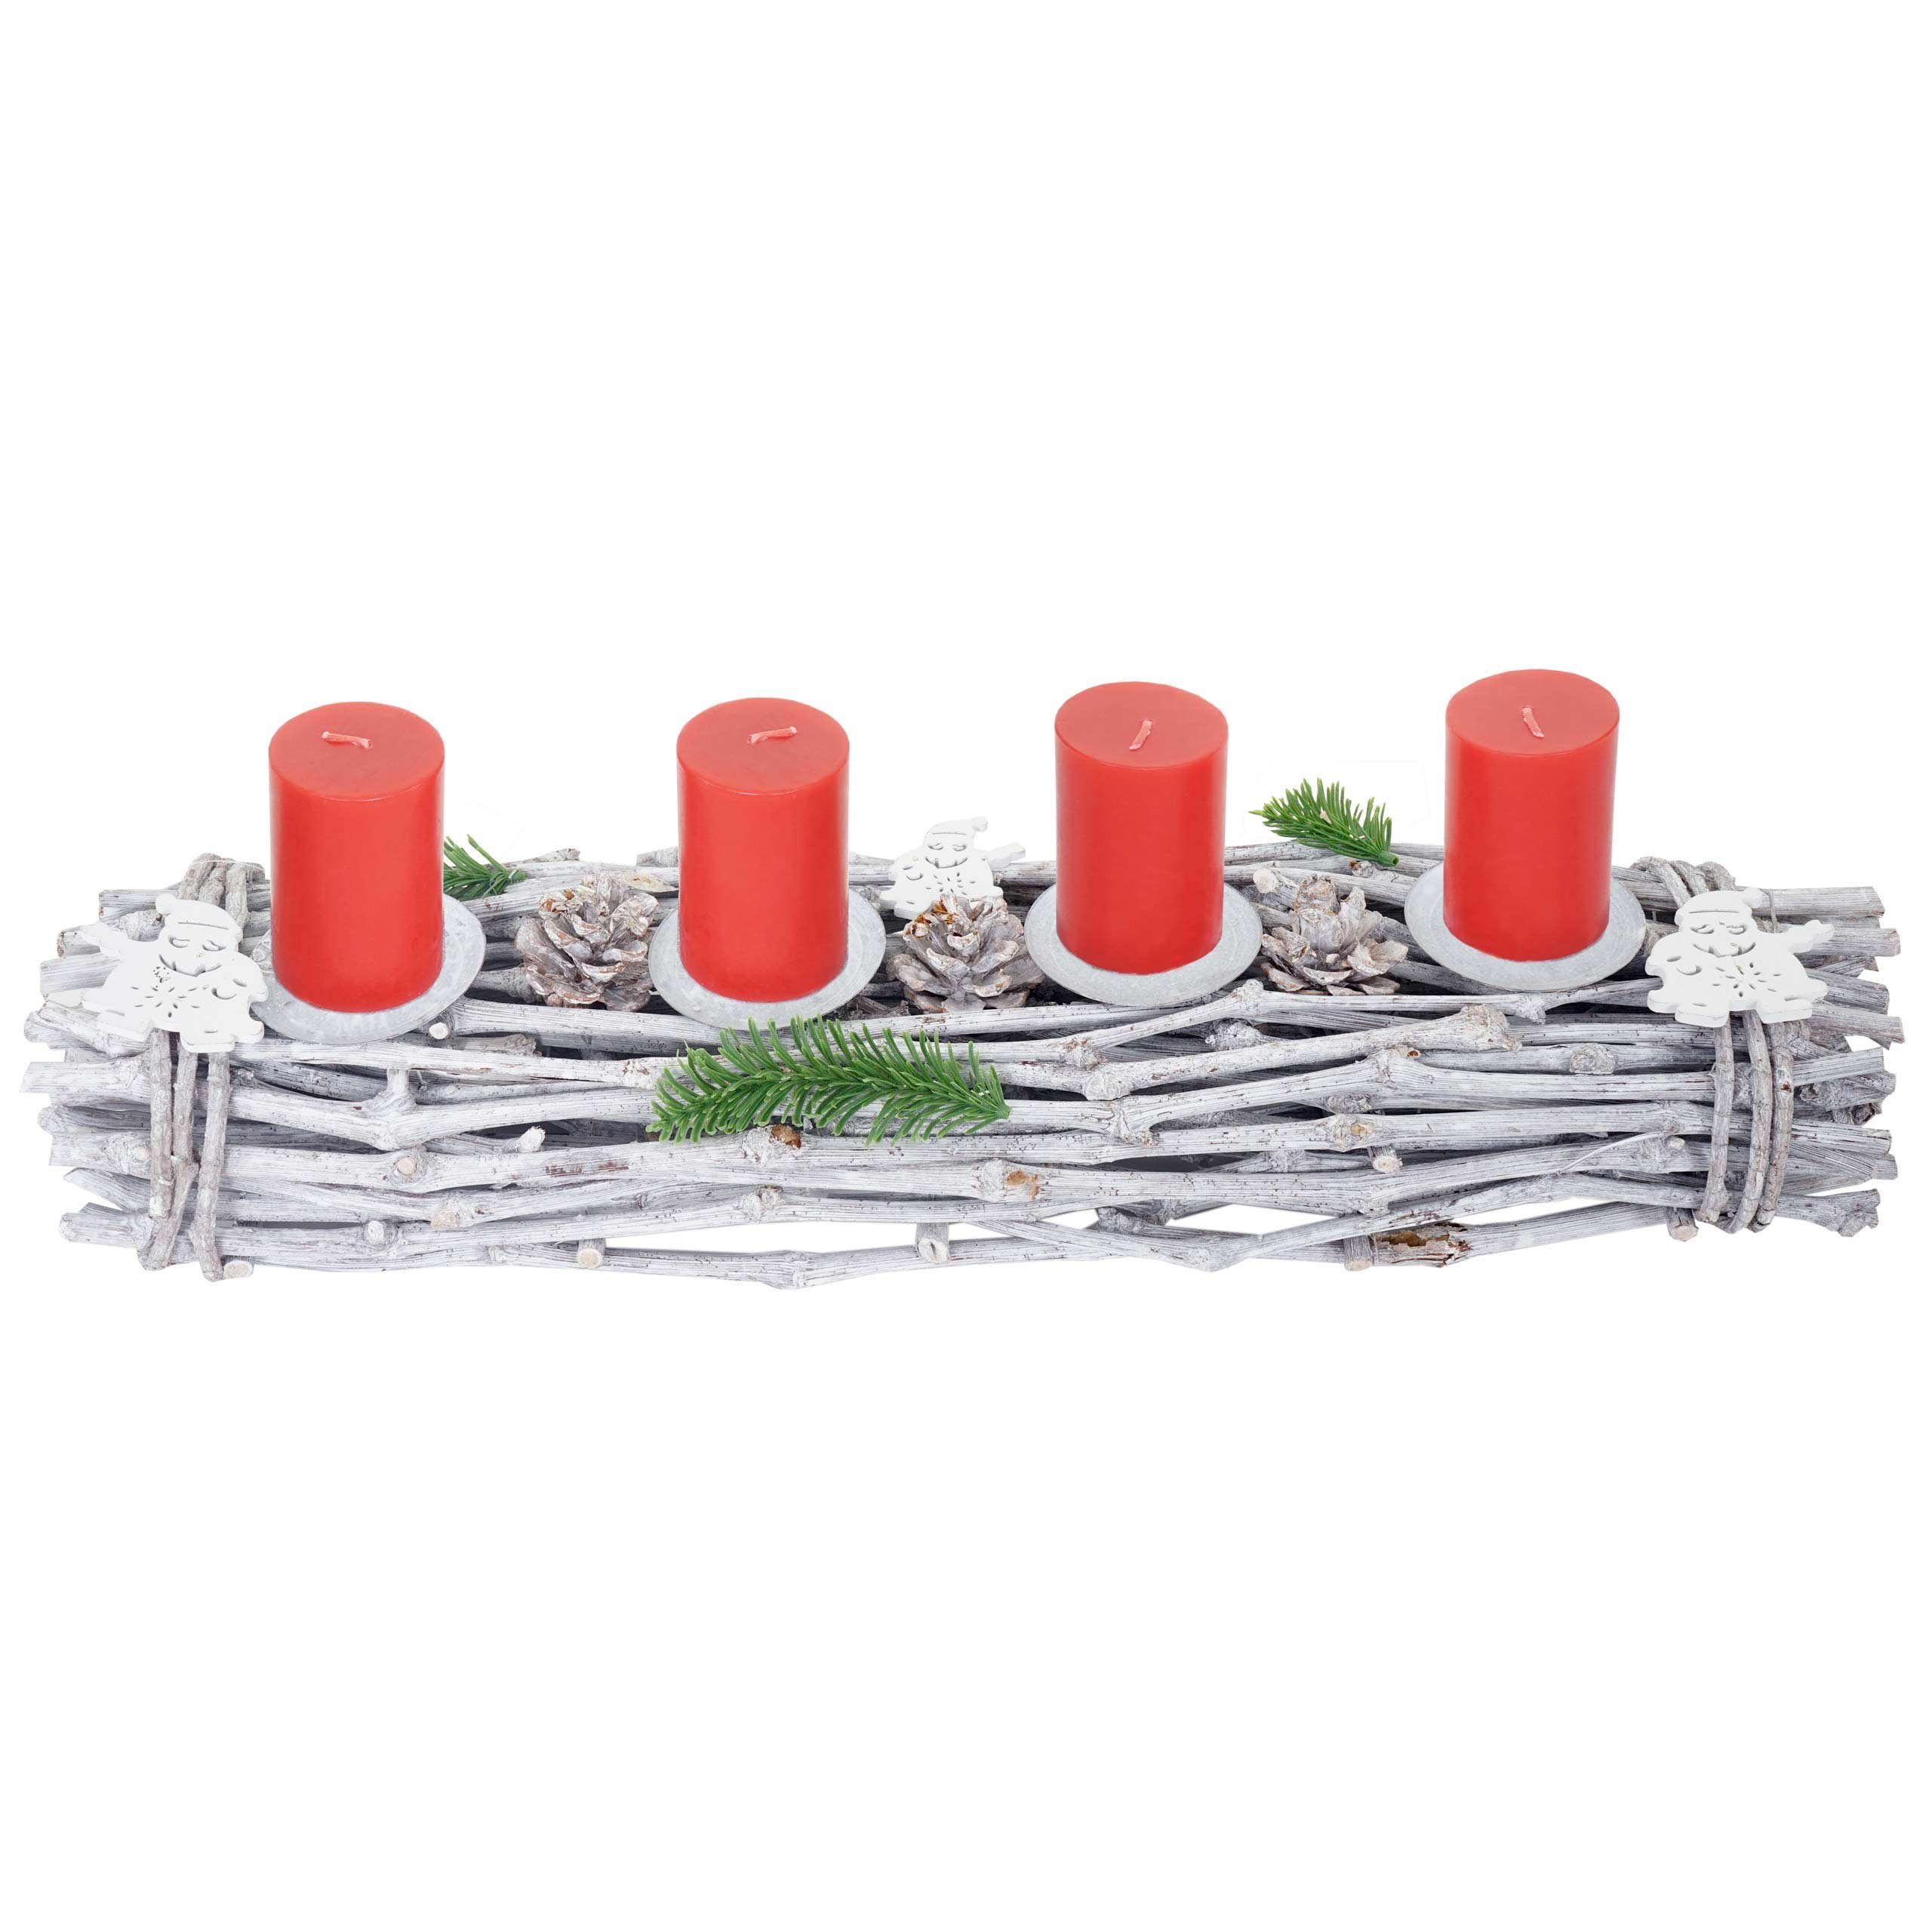 MCW Adventskranz T783-L, Mit 4 Kerzenhaltern, Aufwendig geschmückt weiß, rote Kerzen | Kunstkränze